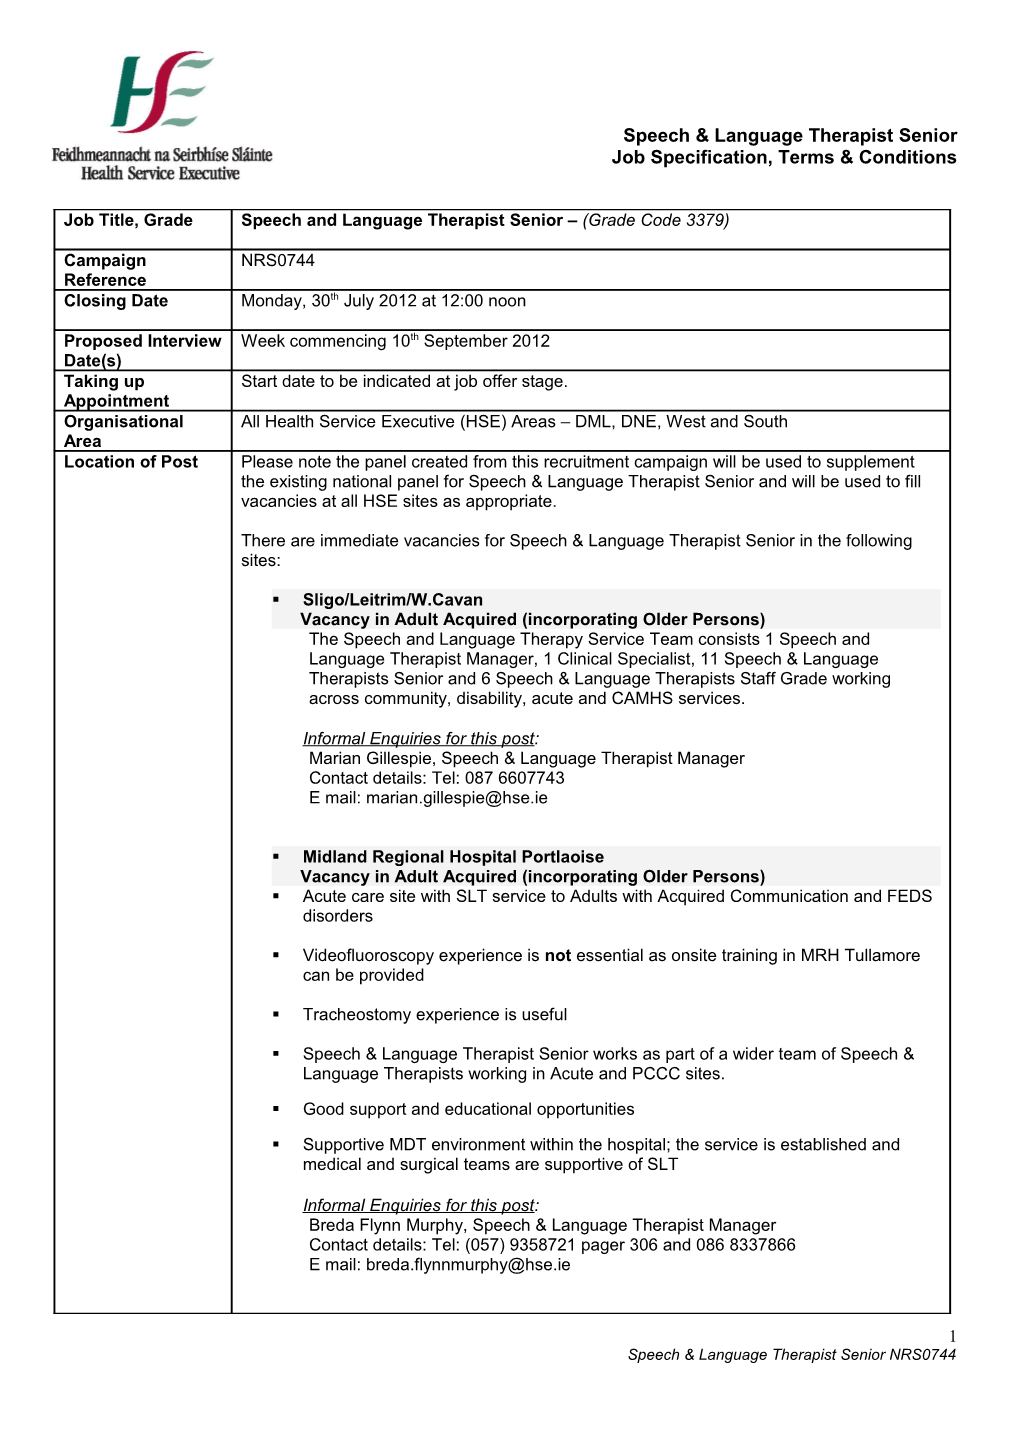 Speech & Language Therapist (Senior Grade) Job Specification, Terms & Conditions